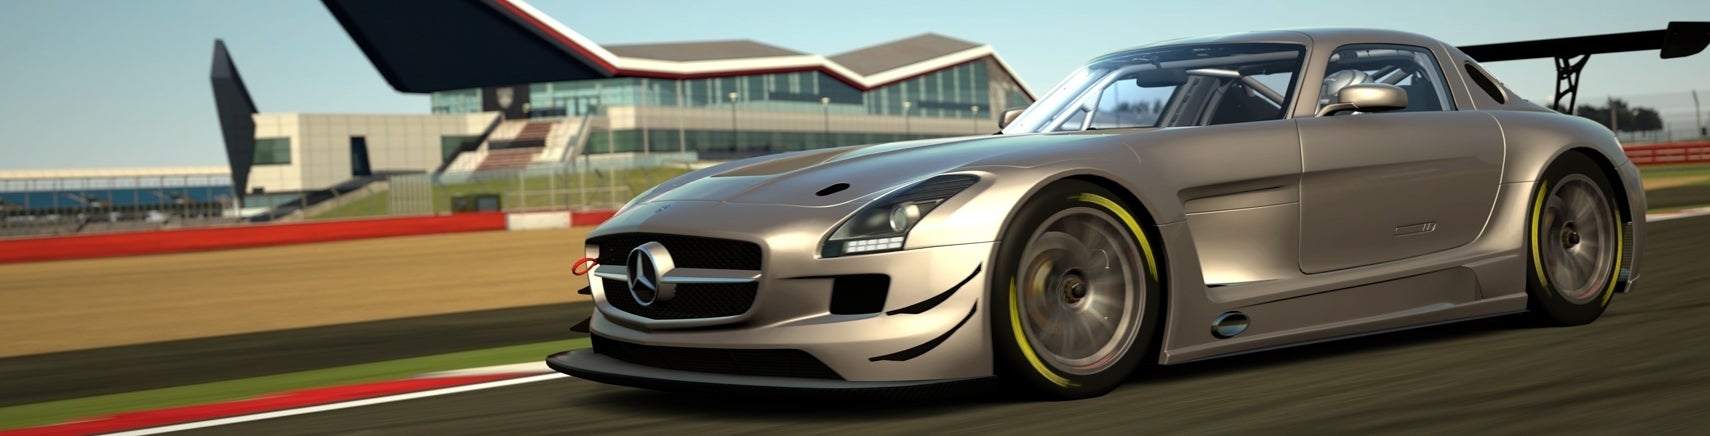 Imagen para Digital Foundry vs. Gran Turismo 6